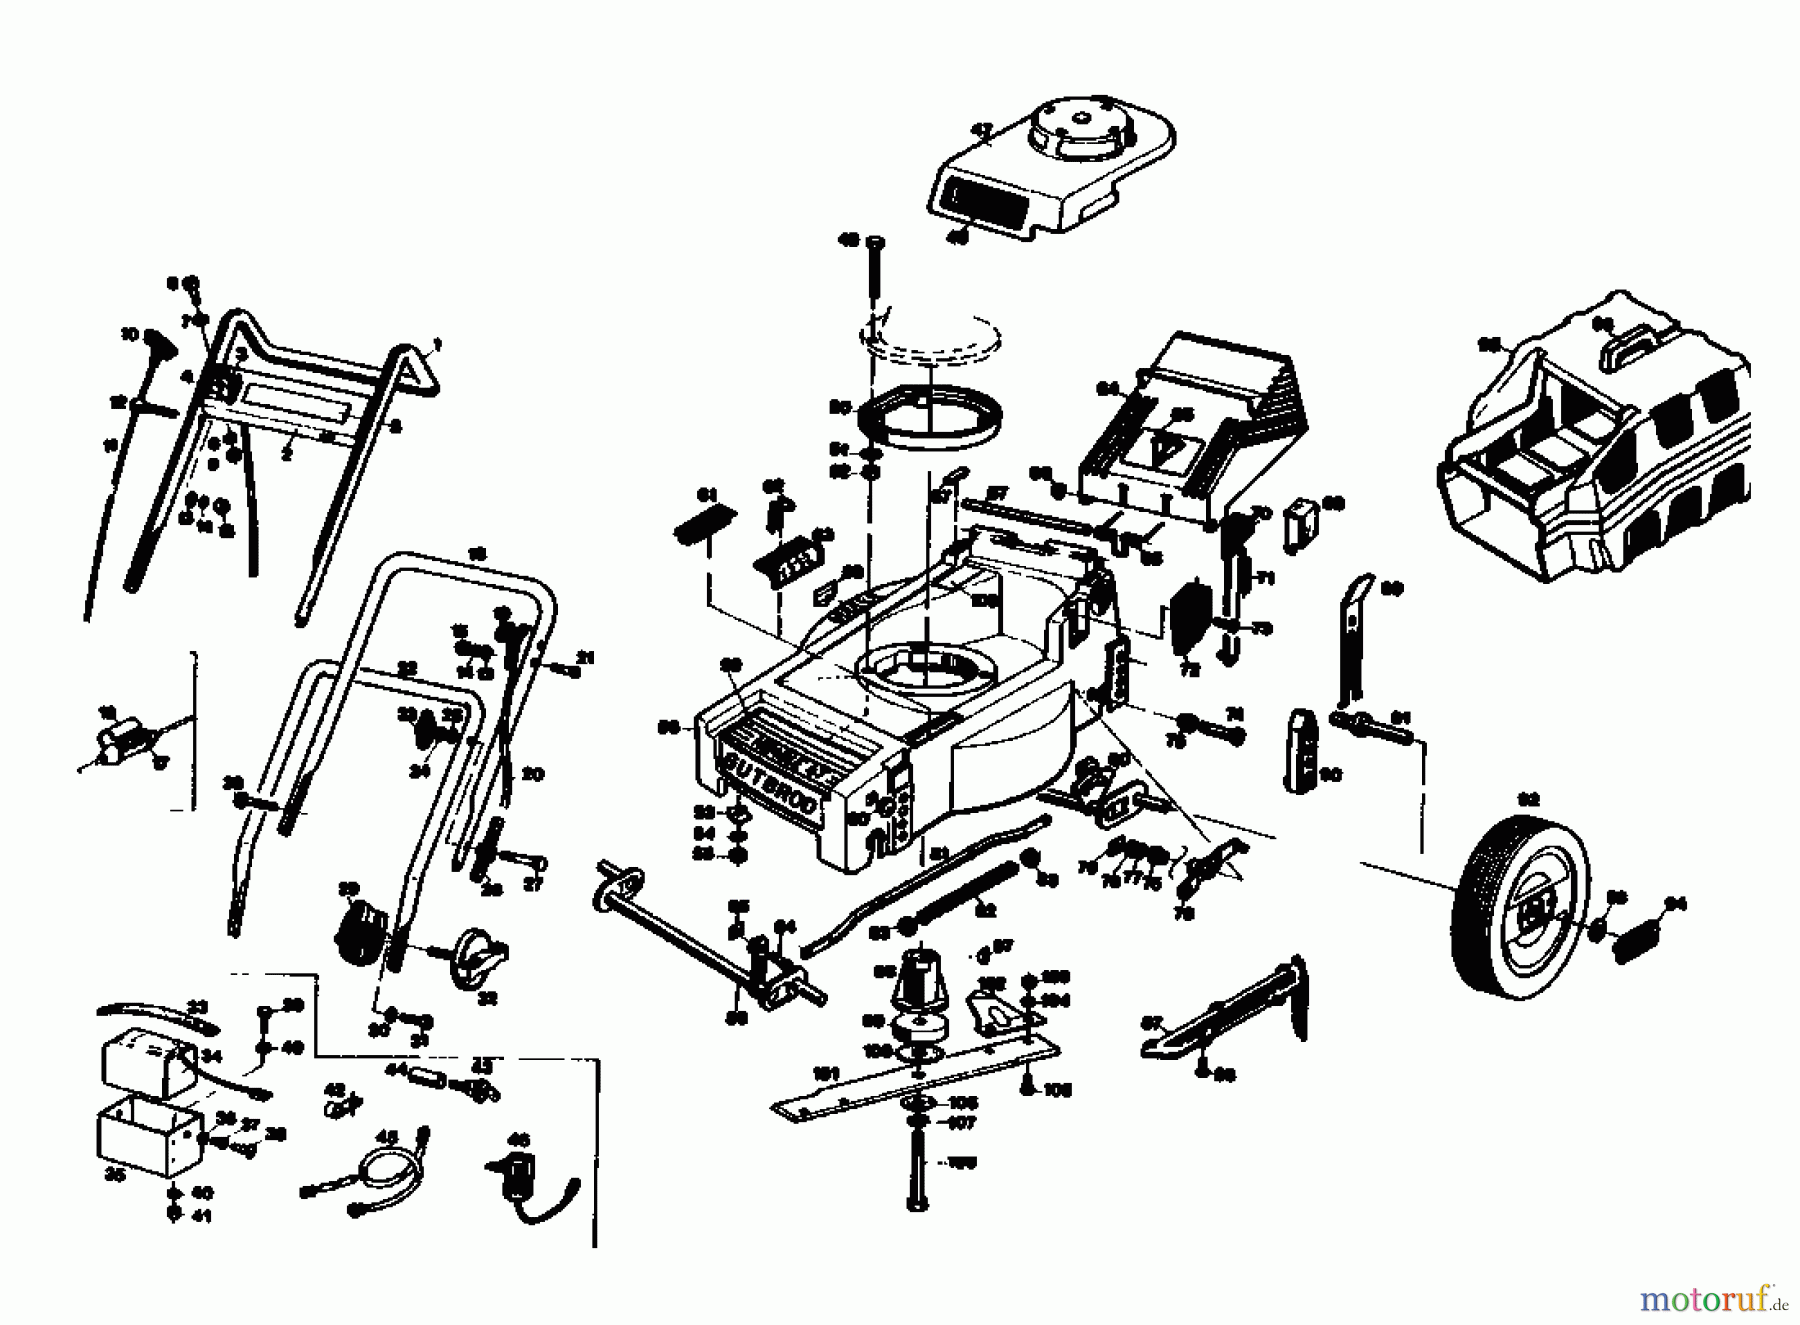  Gutbrod Petrol mower HB 40 02896.01  (1986) Basic machine